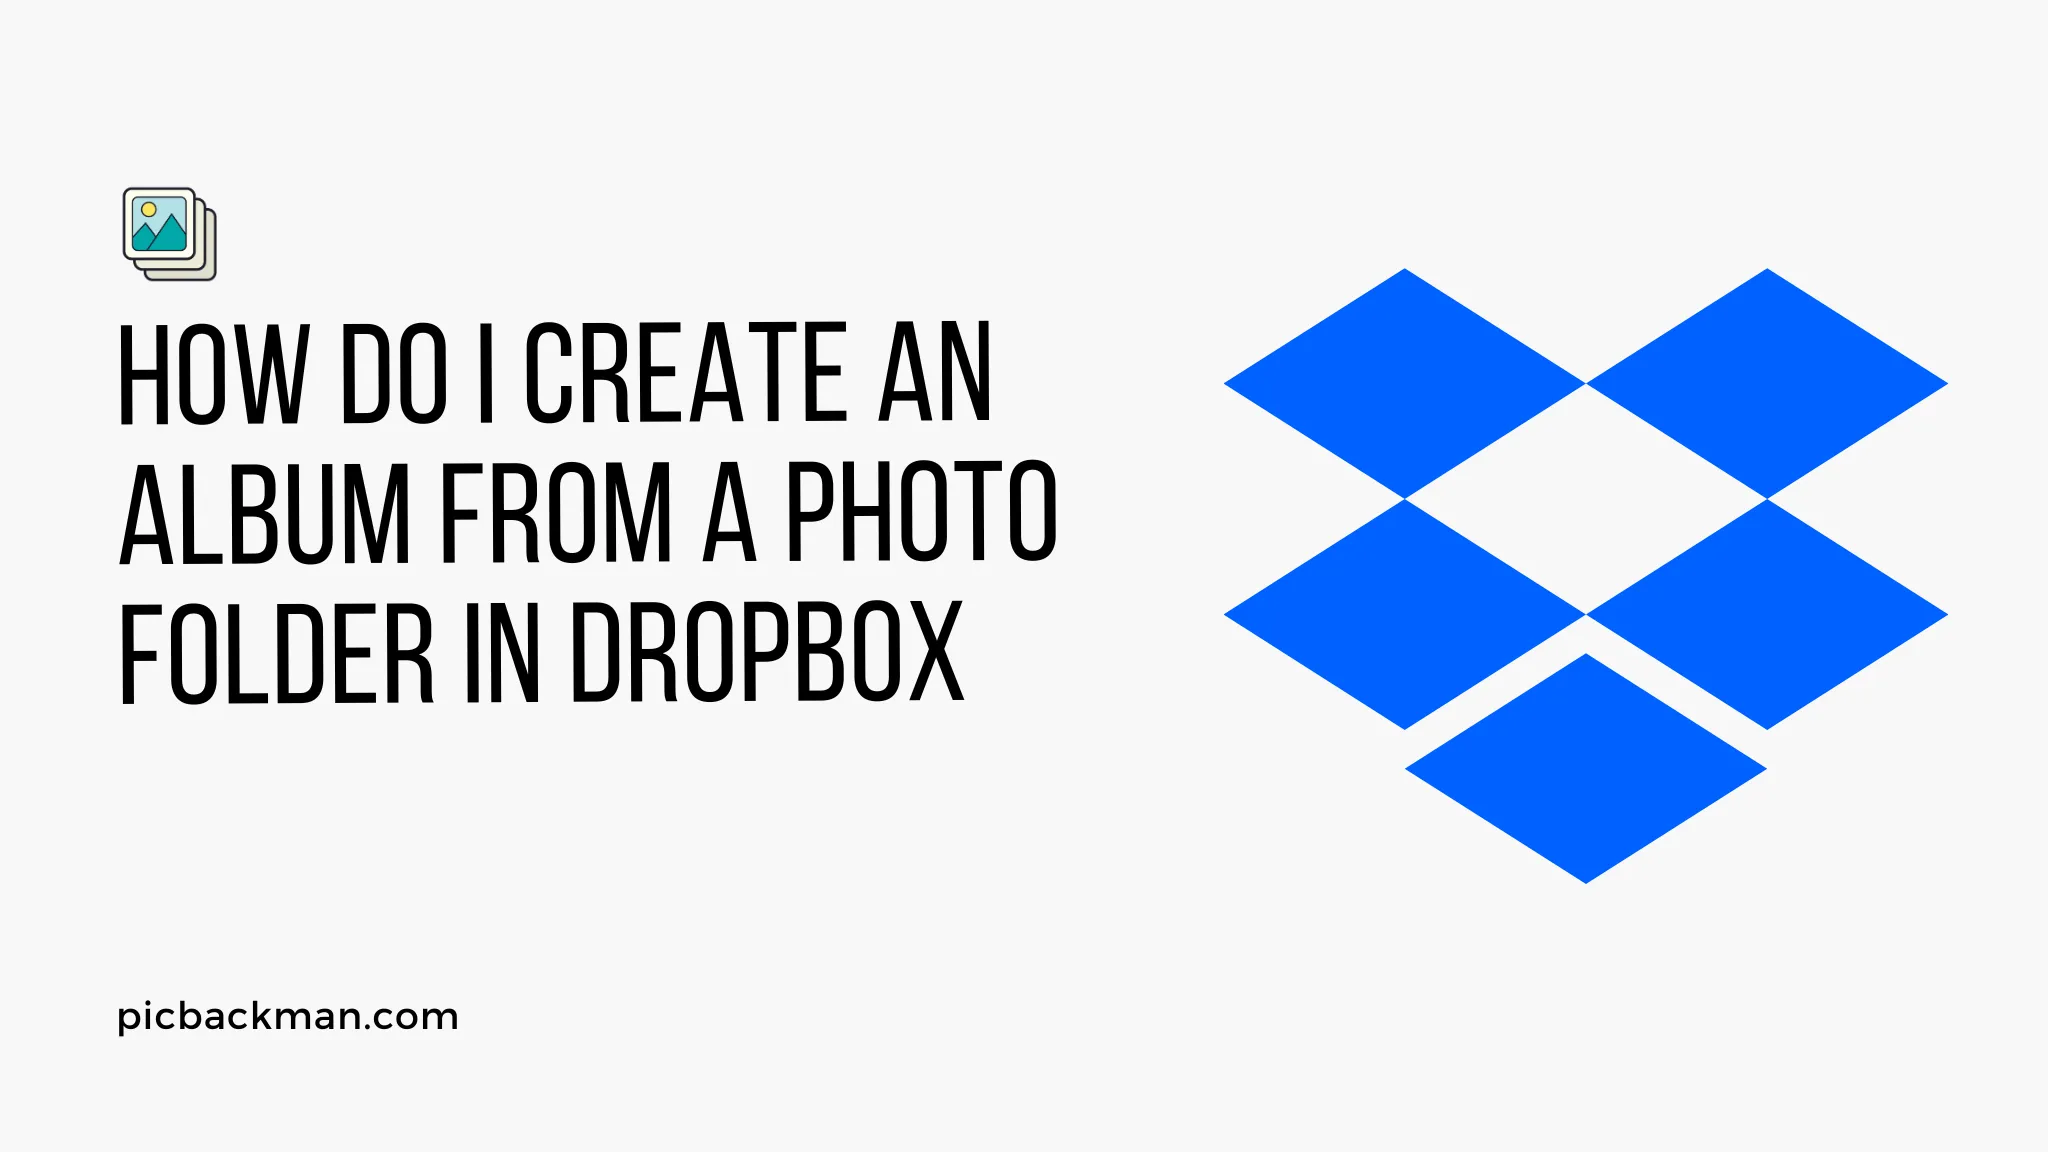 How do I create an album from a photo folder in Dropbox?